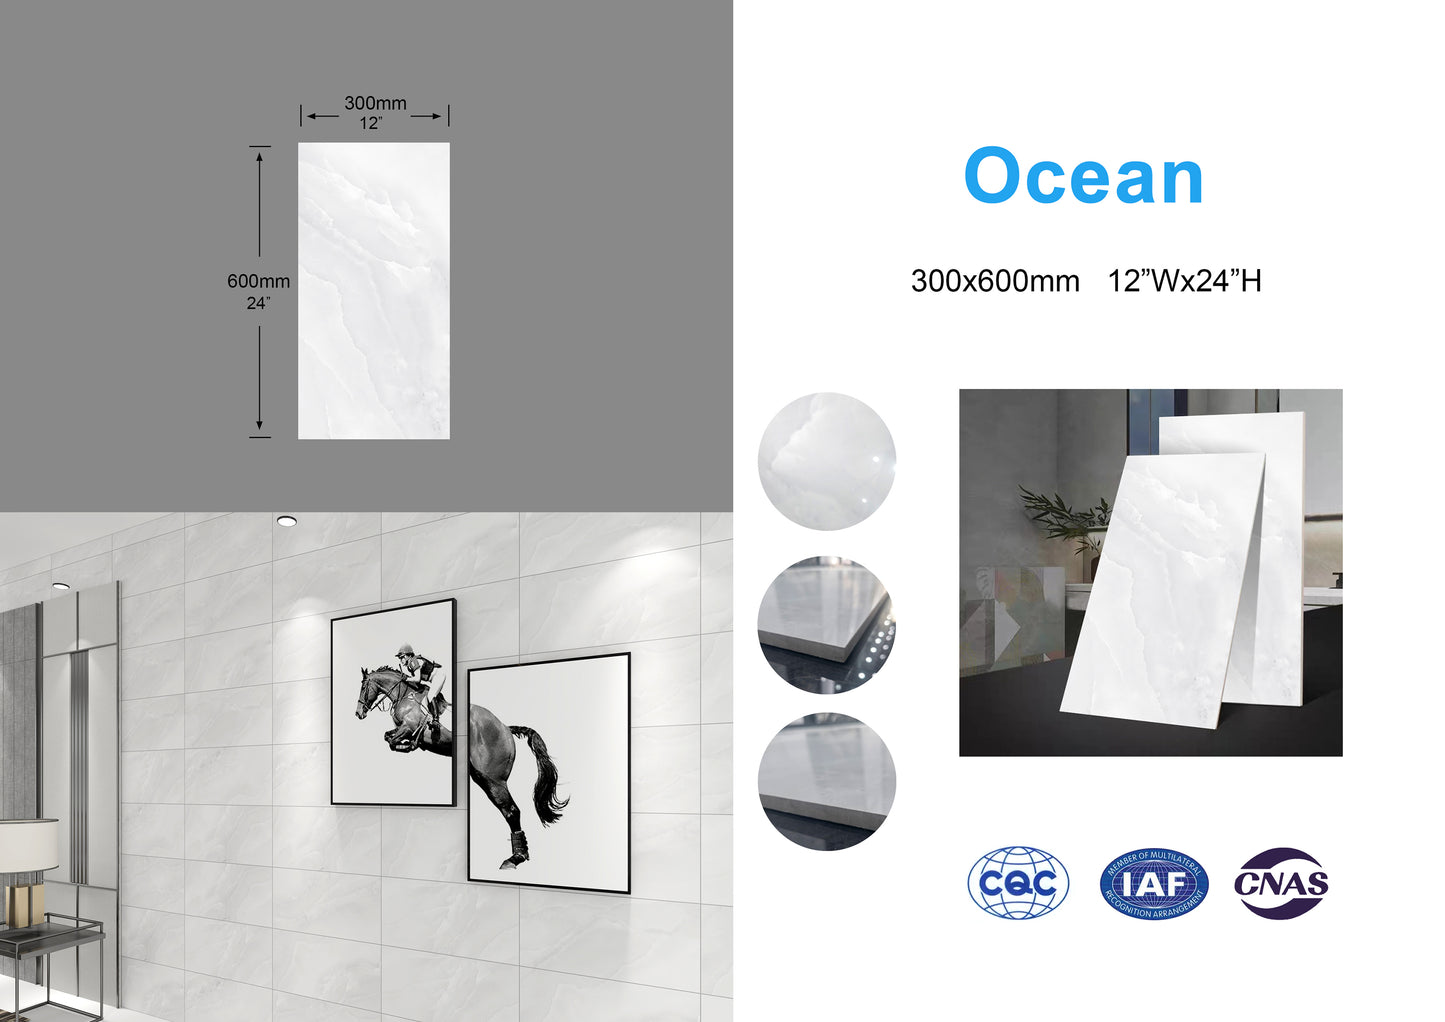 Ocean family Full Polished Glazed Tile light gray 12"x24" 8pcs/box 16sf/box $22.24/box $1.39/sf (15 days return/exchange) Bulk Deal 1000sf+ $1.19/SF(No return/no exchange)